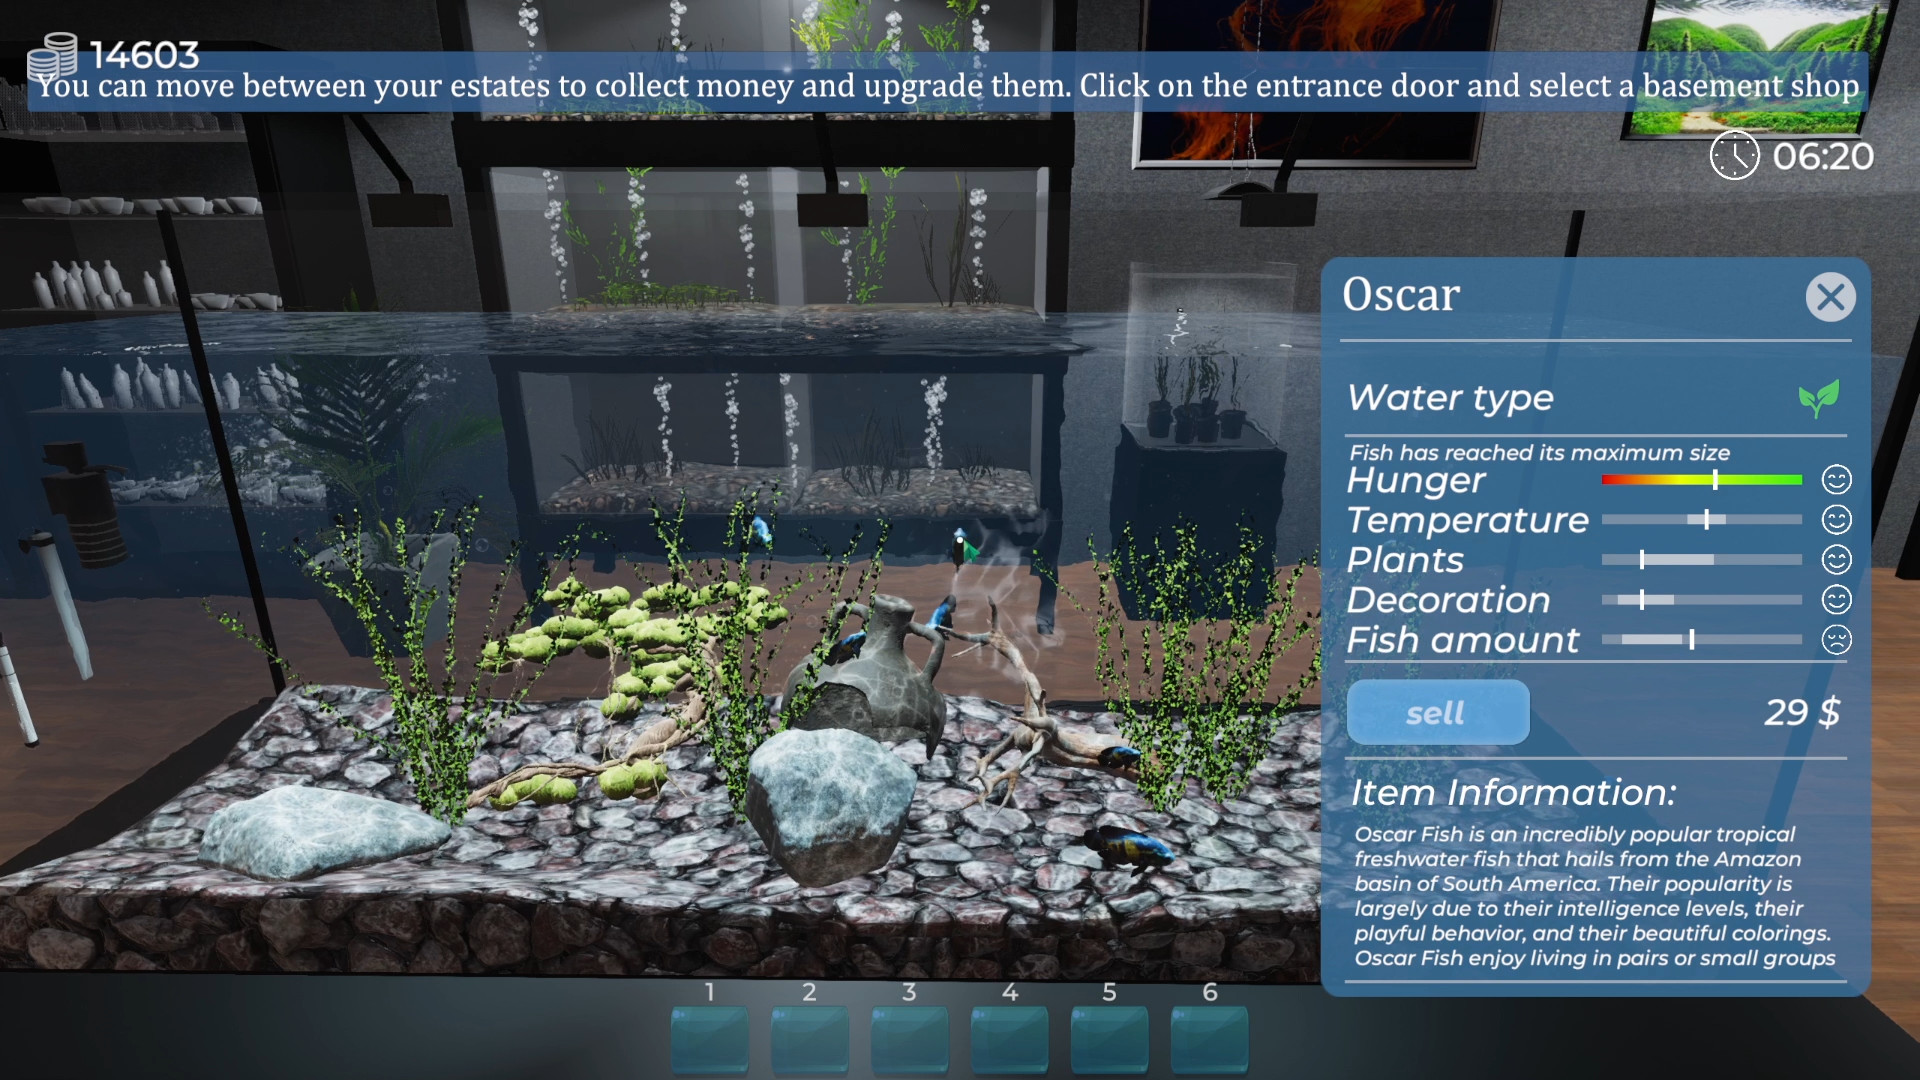 Aquarist - build aquariums, grow fish, develop your business! Free Download